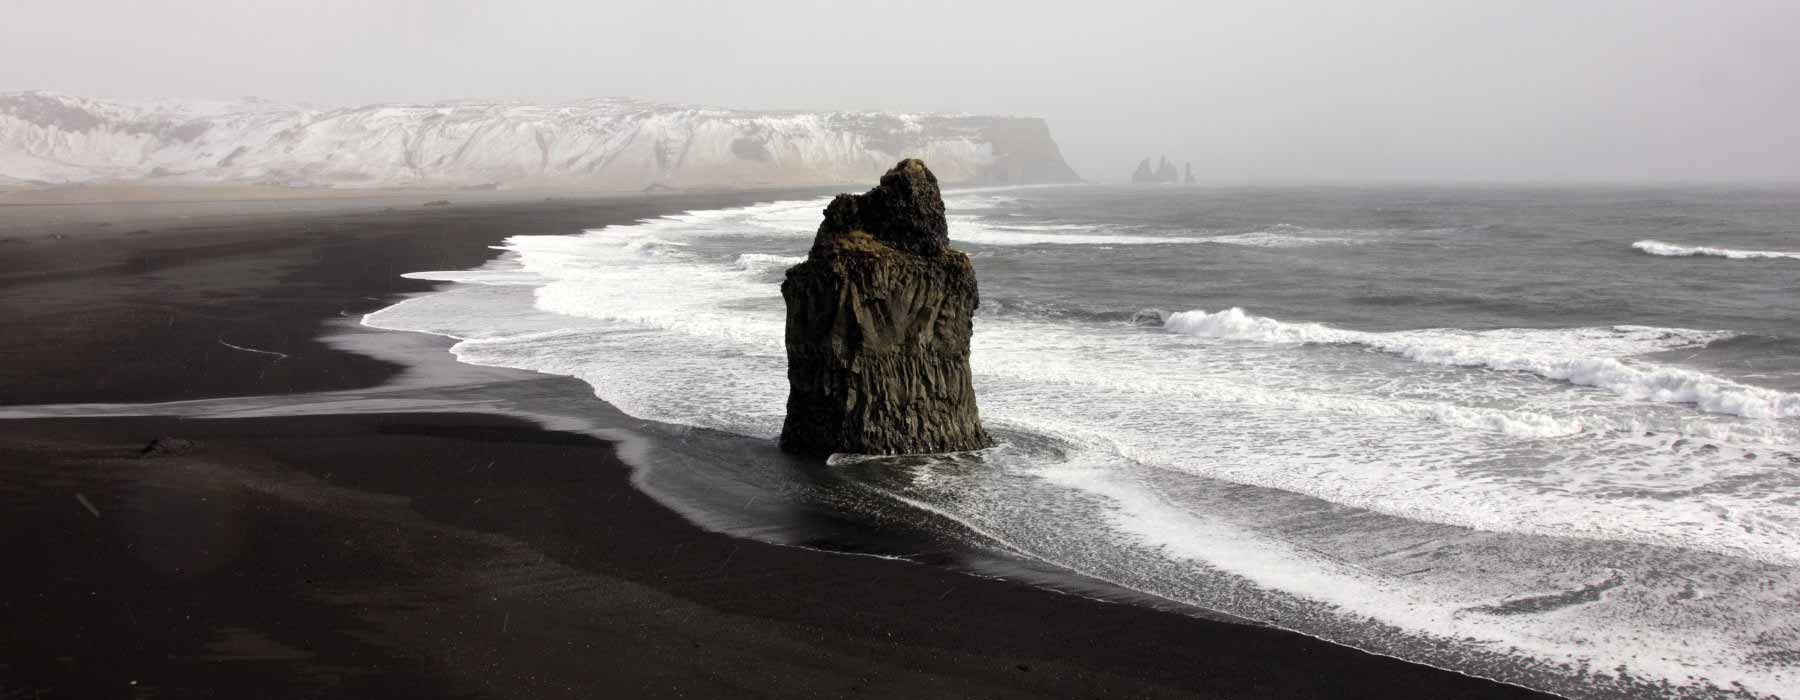 All our Iceland<br class="hidden-md hidden-lg" /> February Holidays